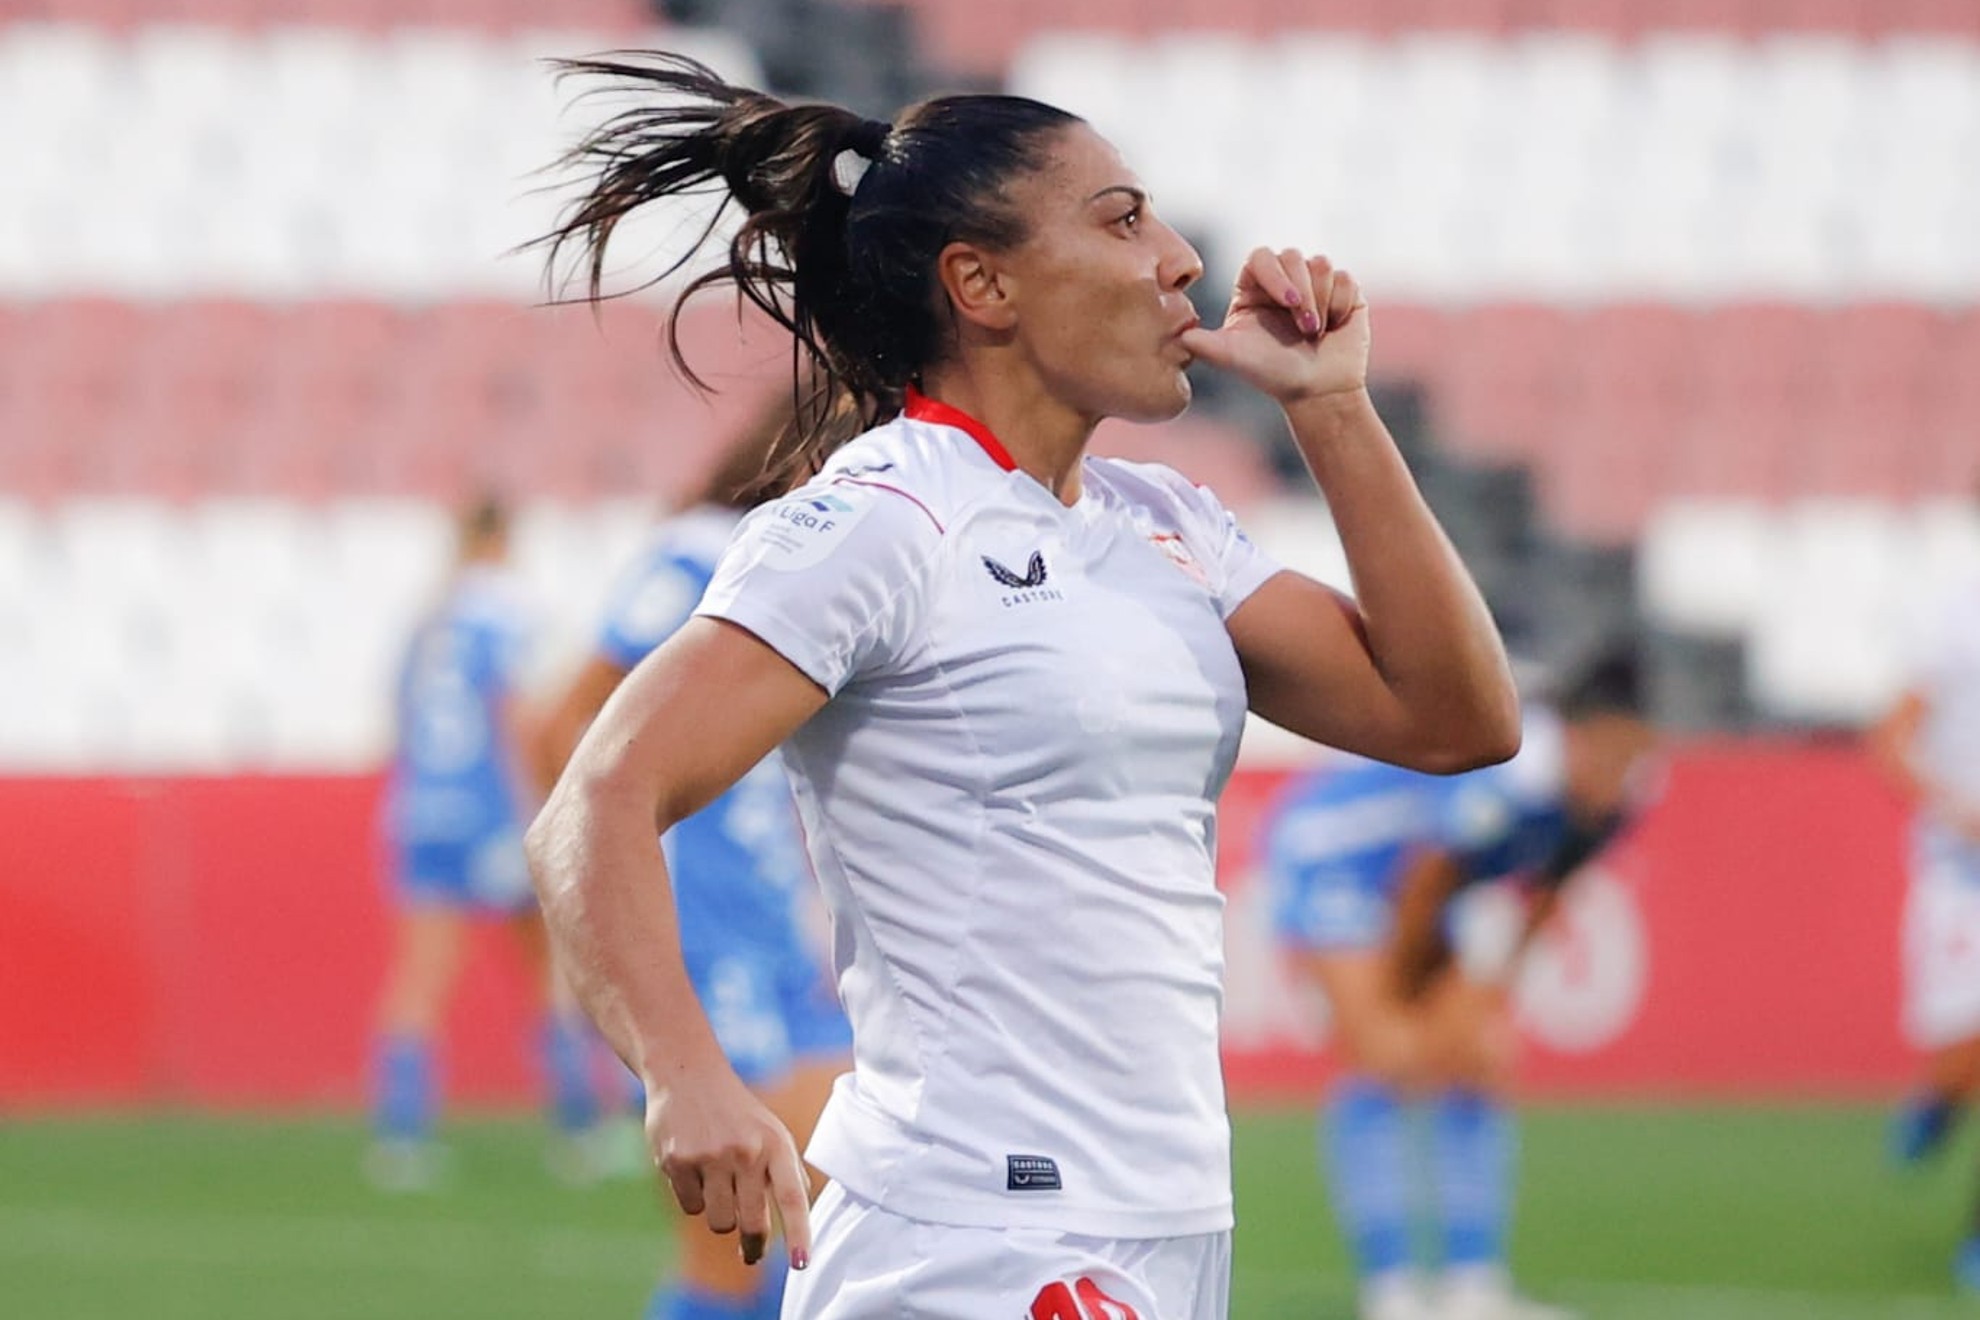 Cristina Martín-Prieto celebra el gol anotado ante el Alhama / Sevilla FC